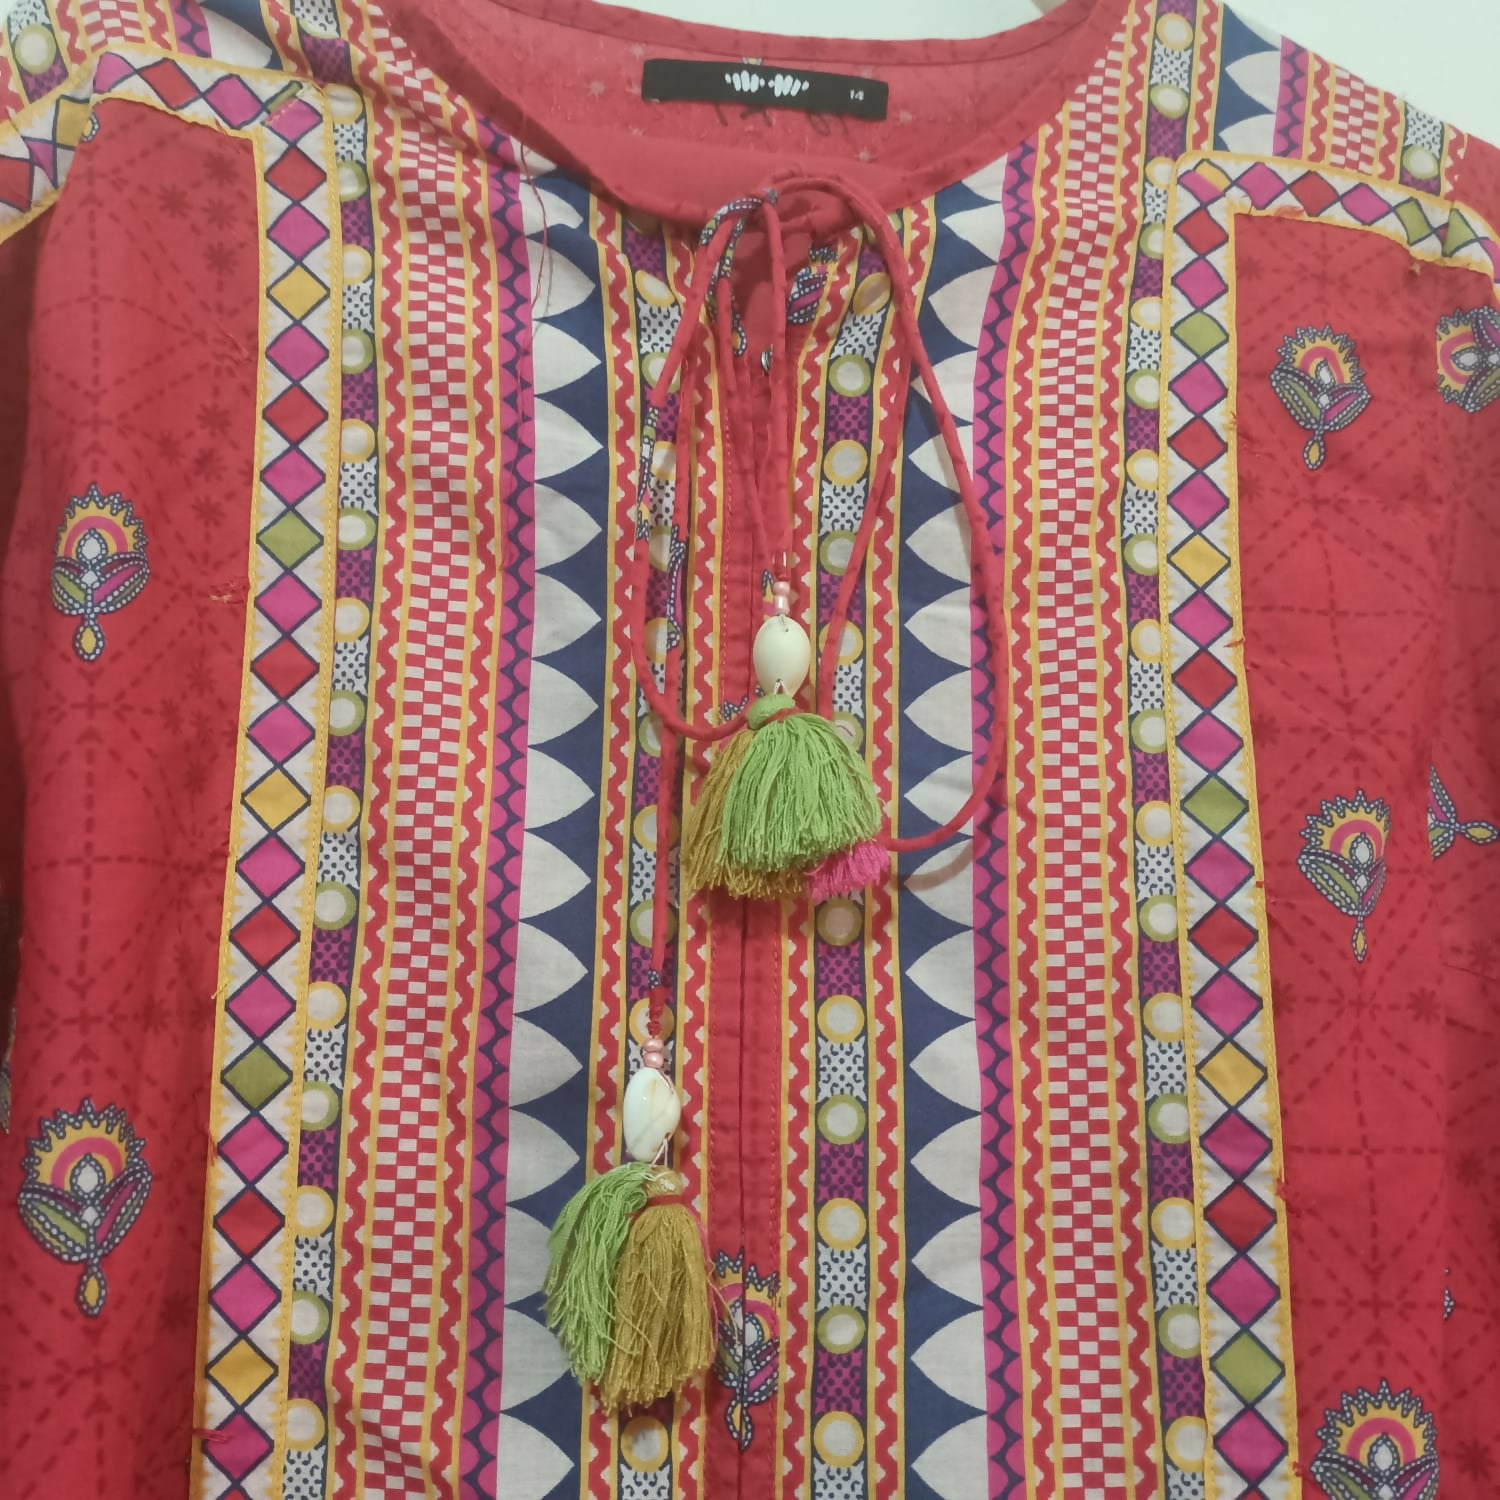 Khaadi | Women Branded Kurta With Pajama | Large | Preloved